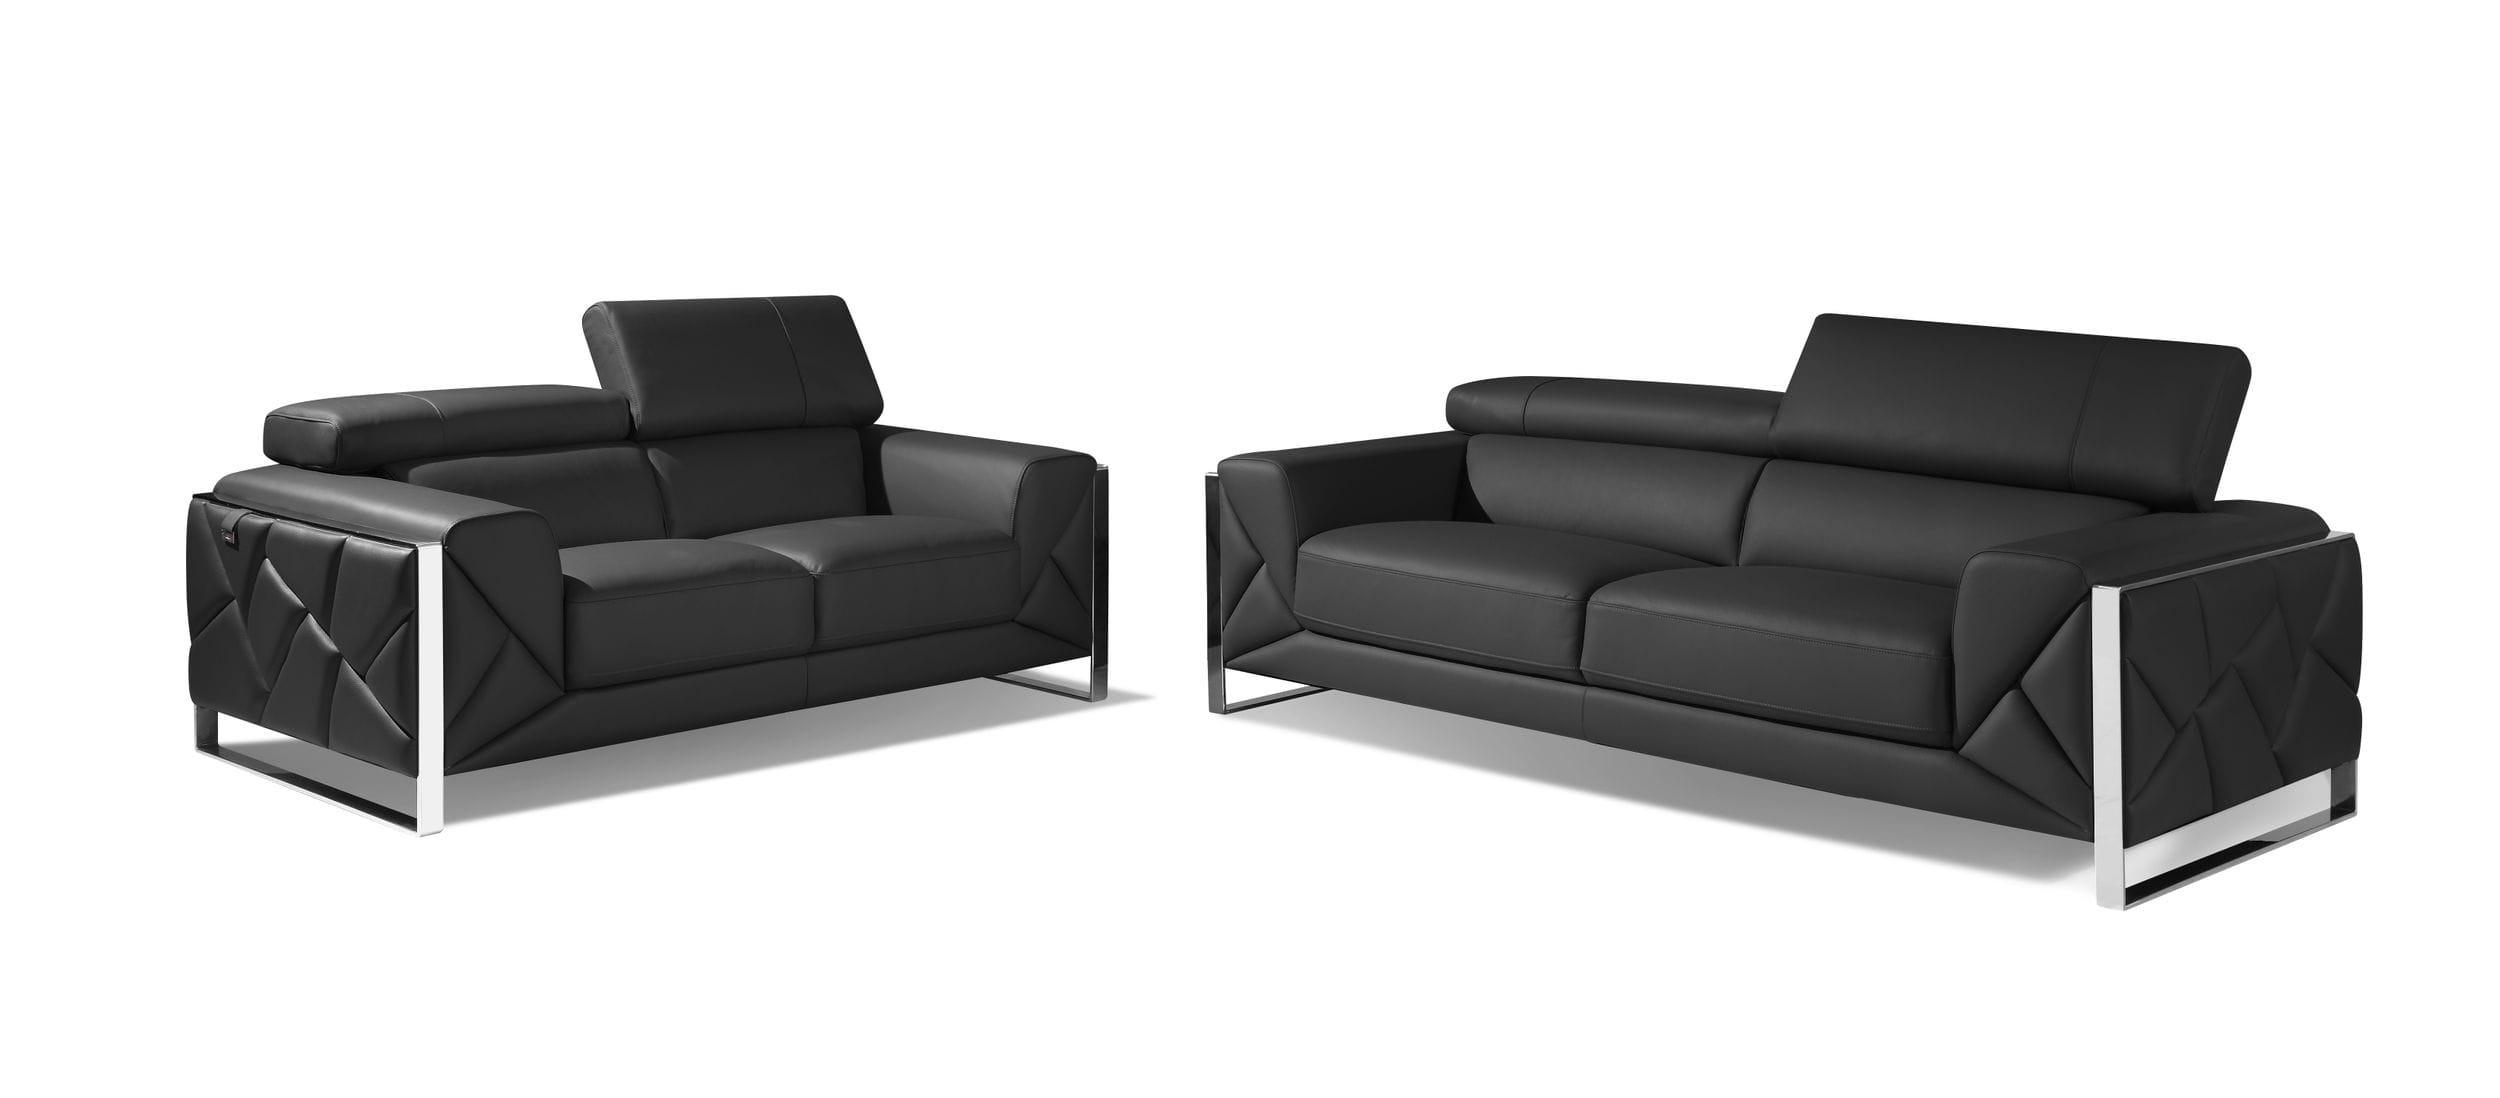 Contemporary Sofa and Loveseat Set 903-DARK_GRAY 903-DARK_GRAY-2PC in Dark Gray Genuine Italian Leatder